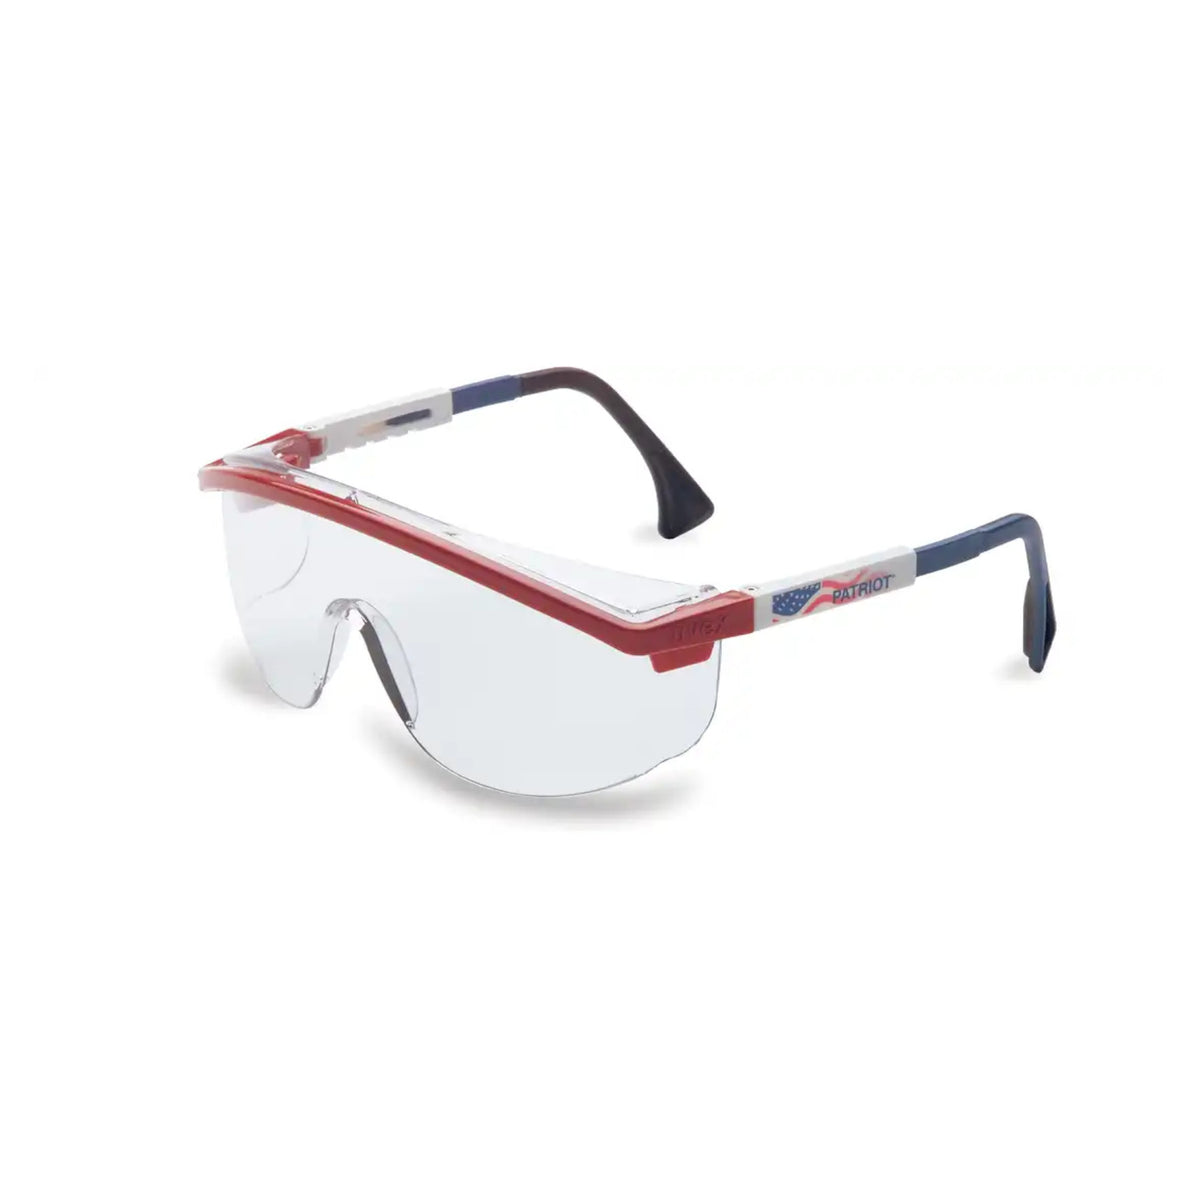 UVEX Patriot Glasses Clear Lens